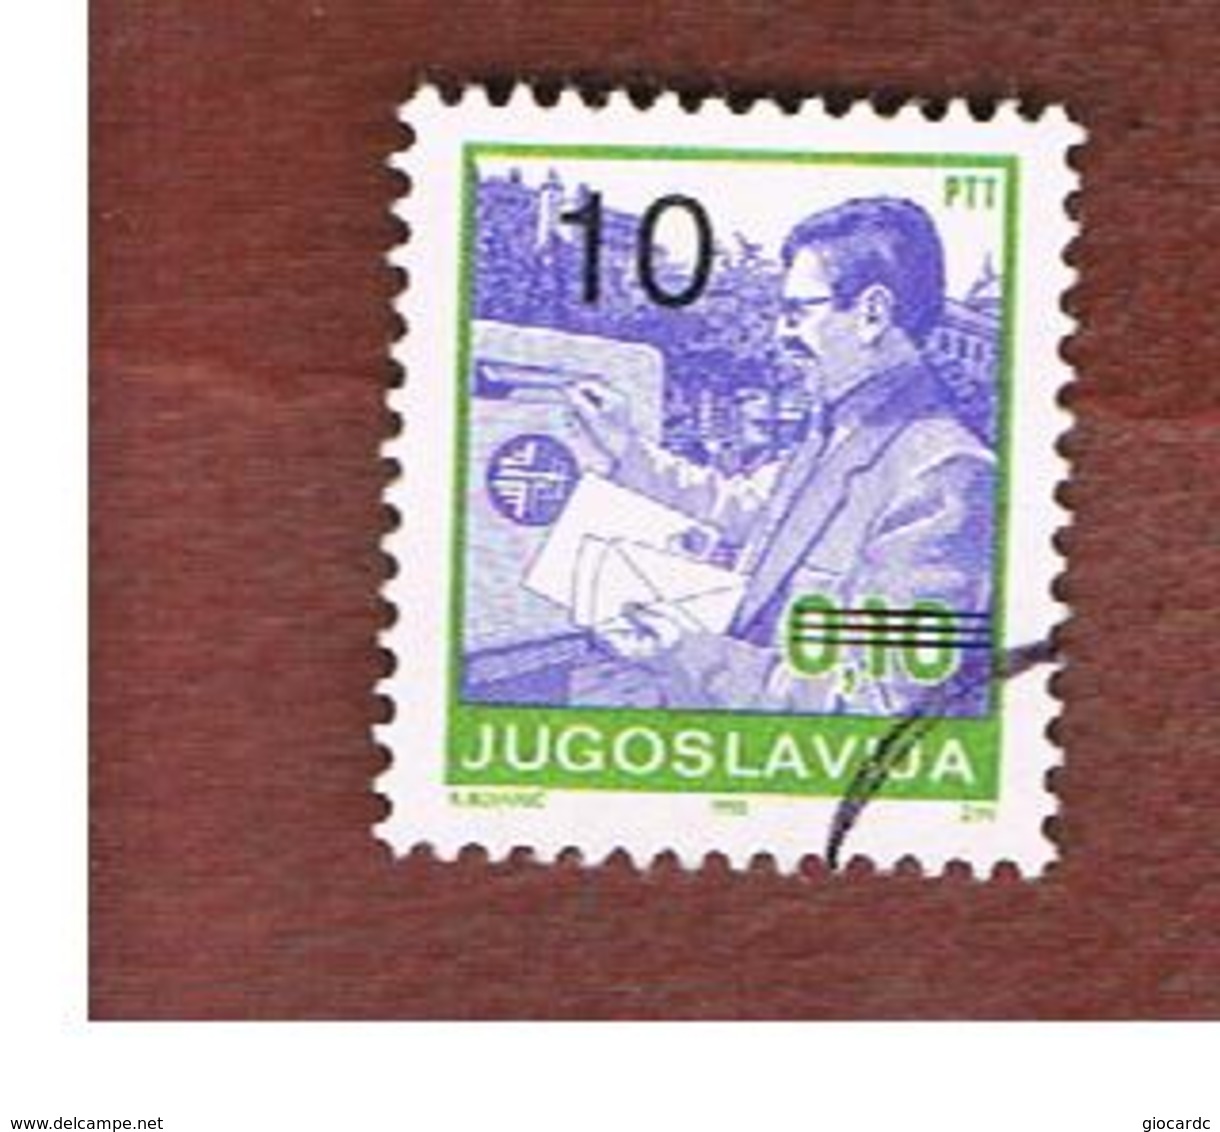 JUGOSLAVIA (YUGOSLAVIA)   - SG 2762  -    1991  POSTAL SERVICES OVERPRINTED   -  USED - Usati